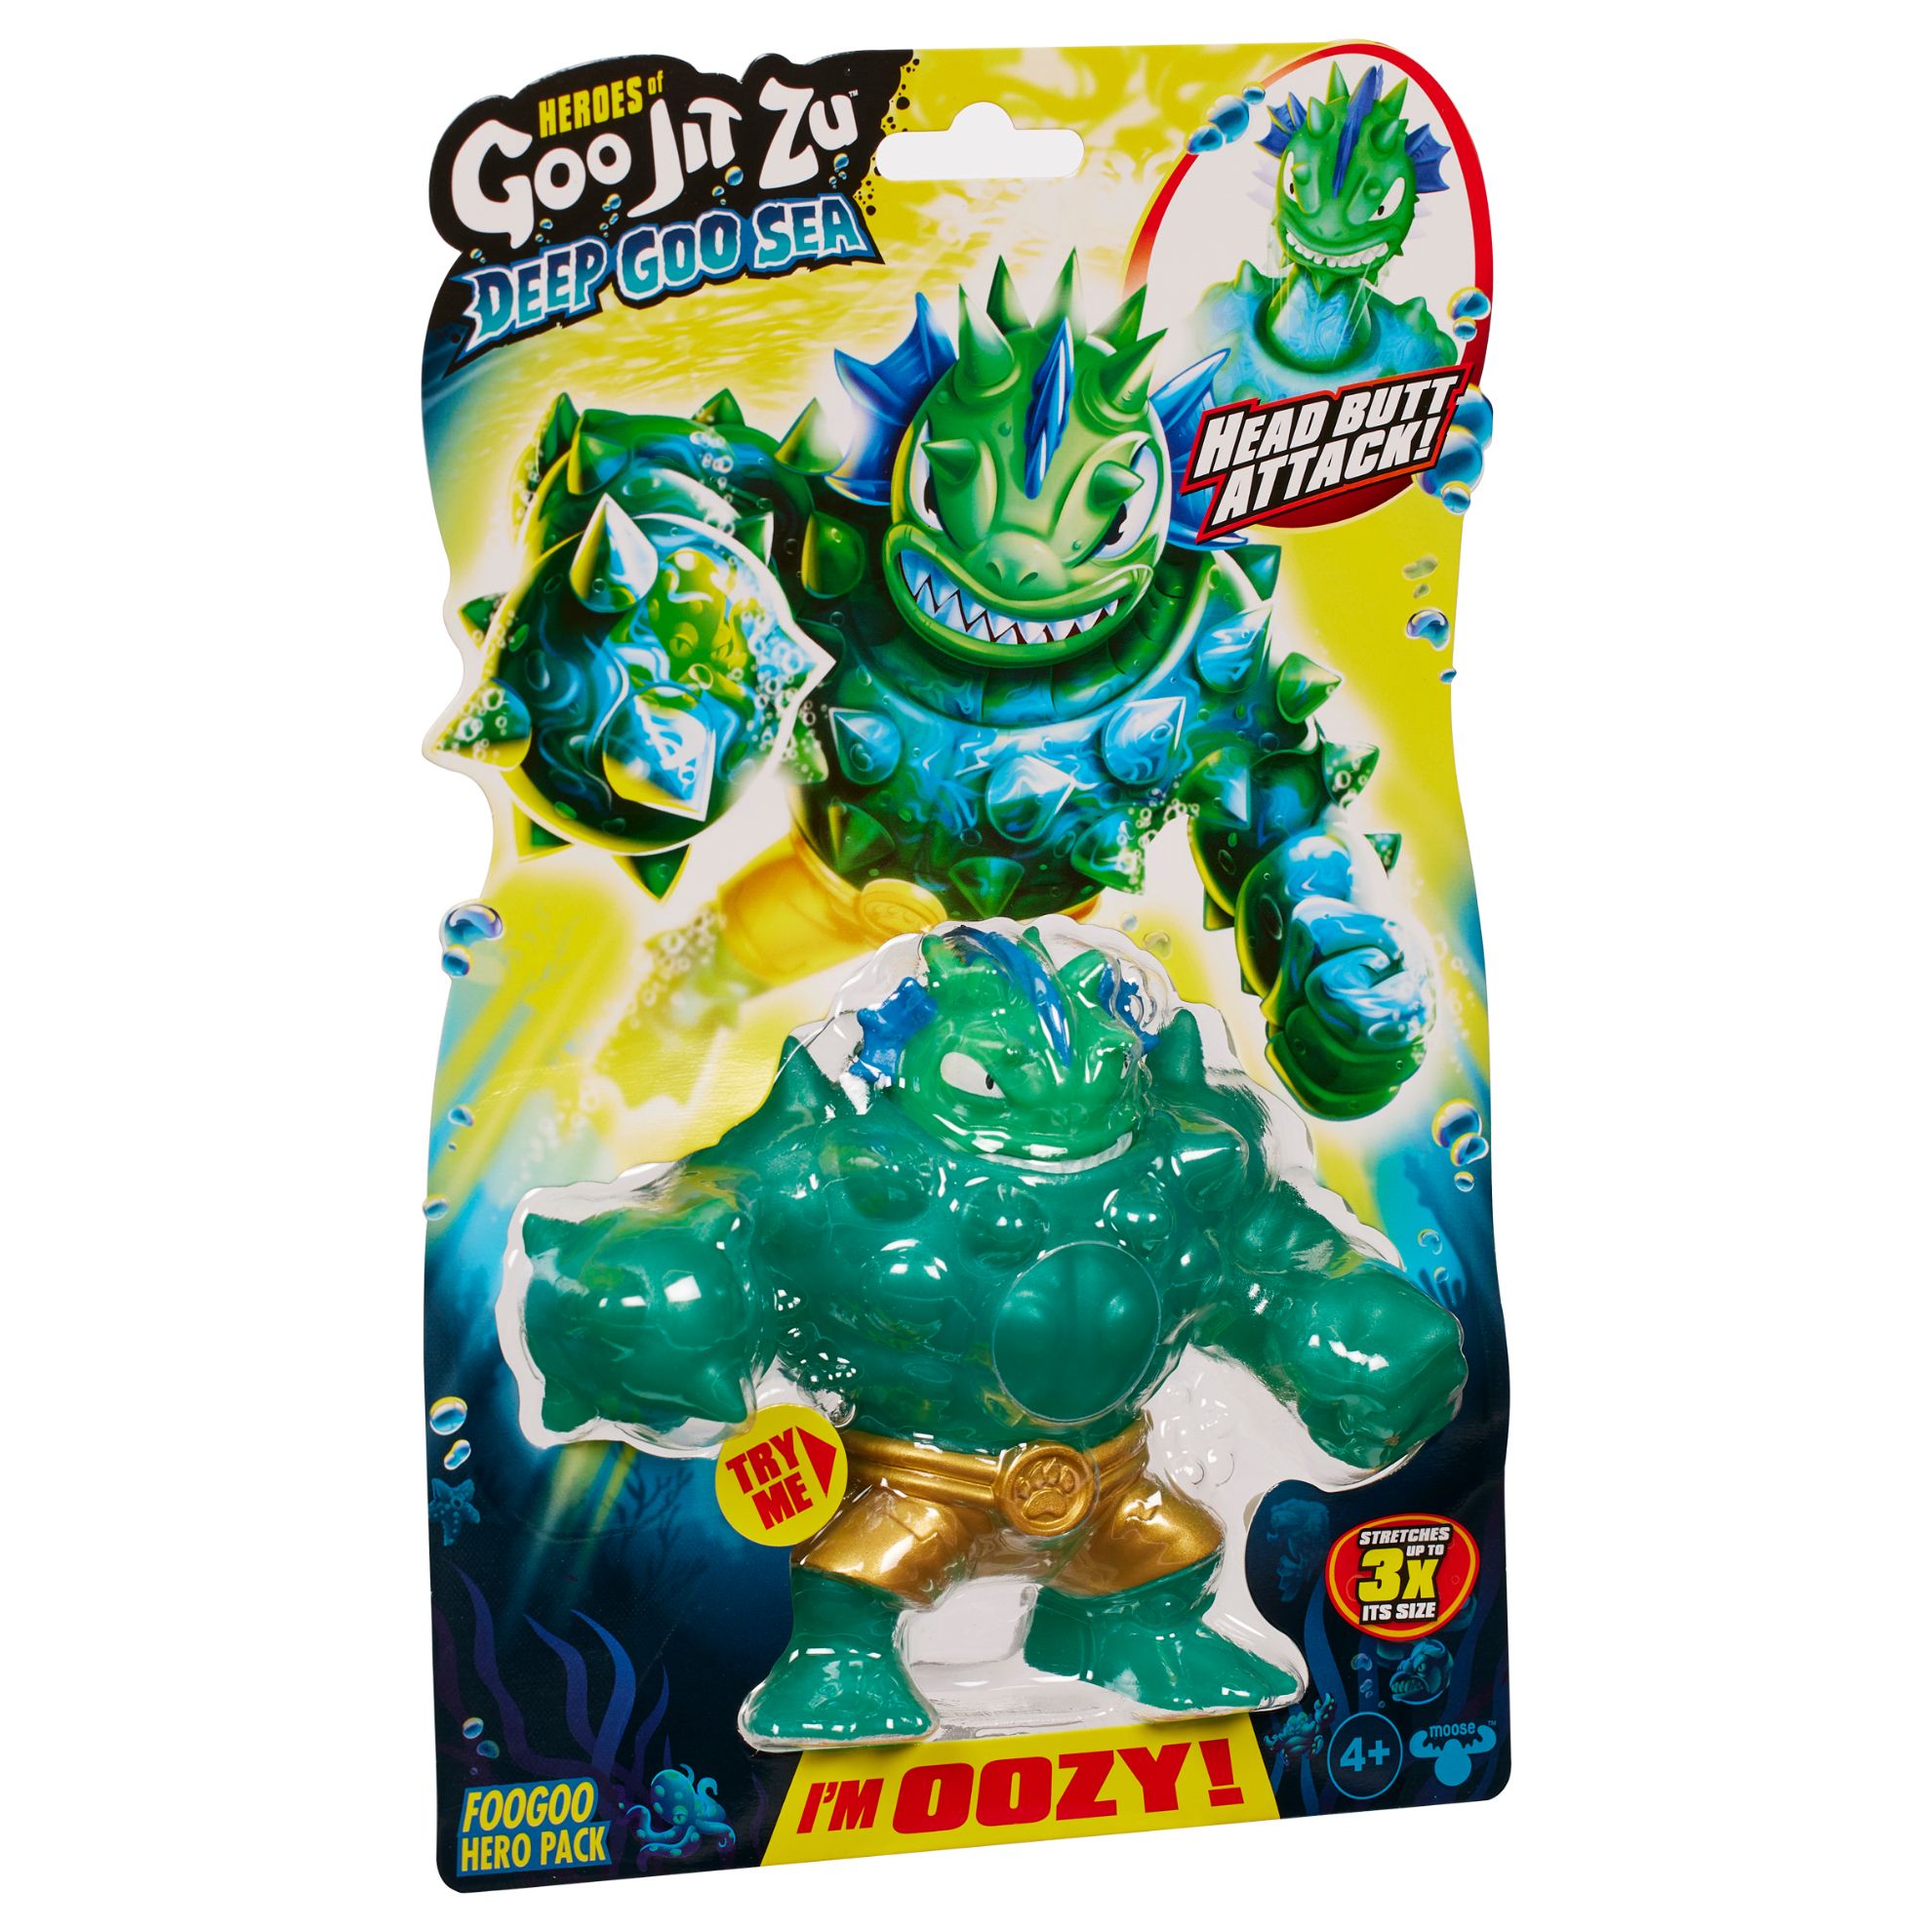 Heroes Of Goo Jit Zu Deep Goo Sea - Mantara - Moose Toys